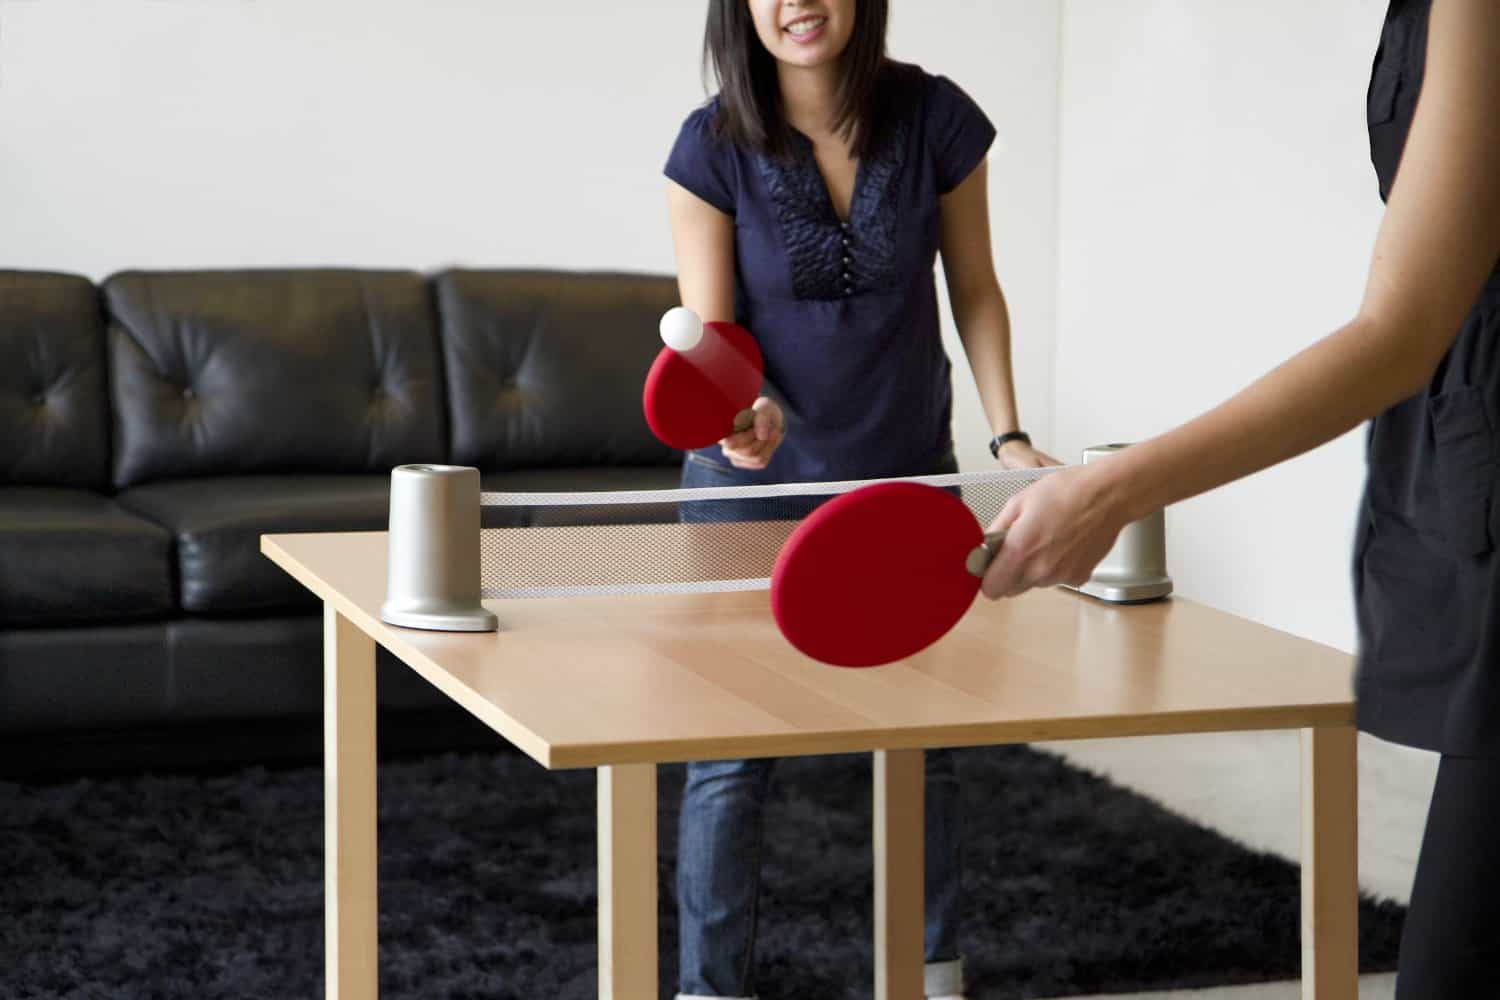 Pongo Portable Table Tennis Set Fun Dorm Room Games